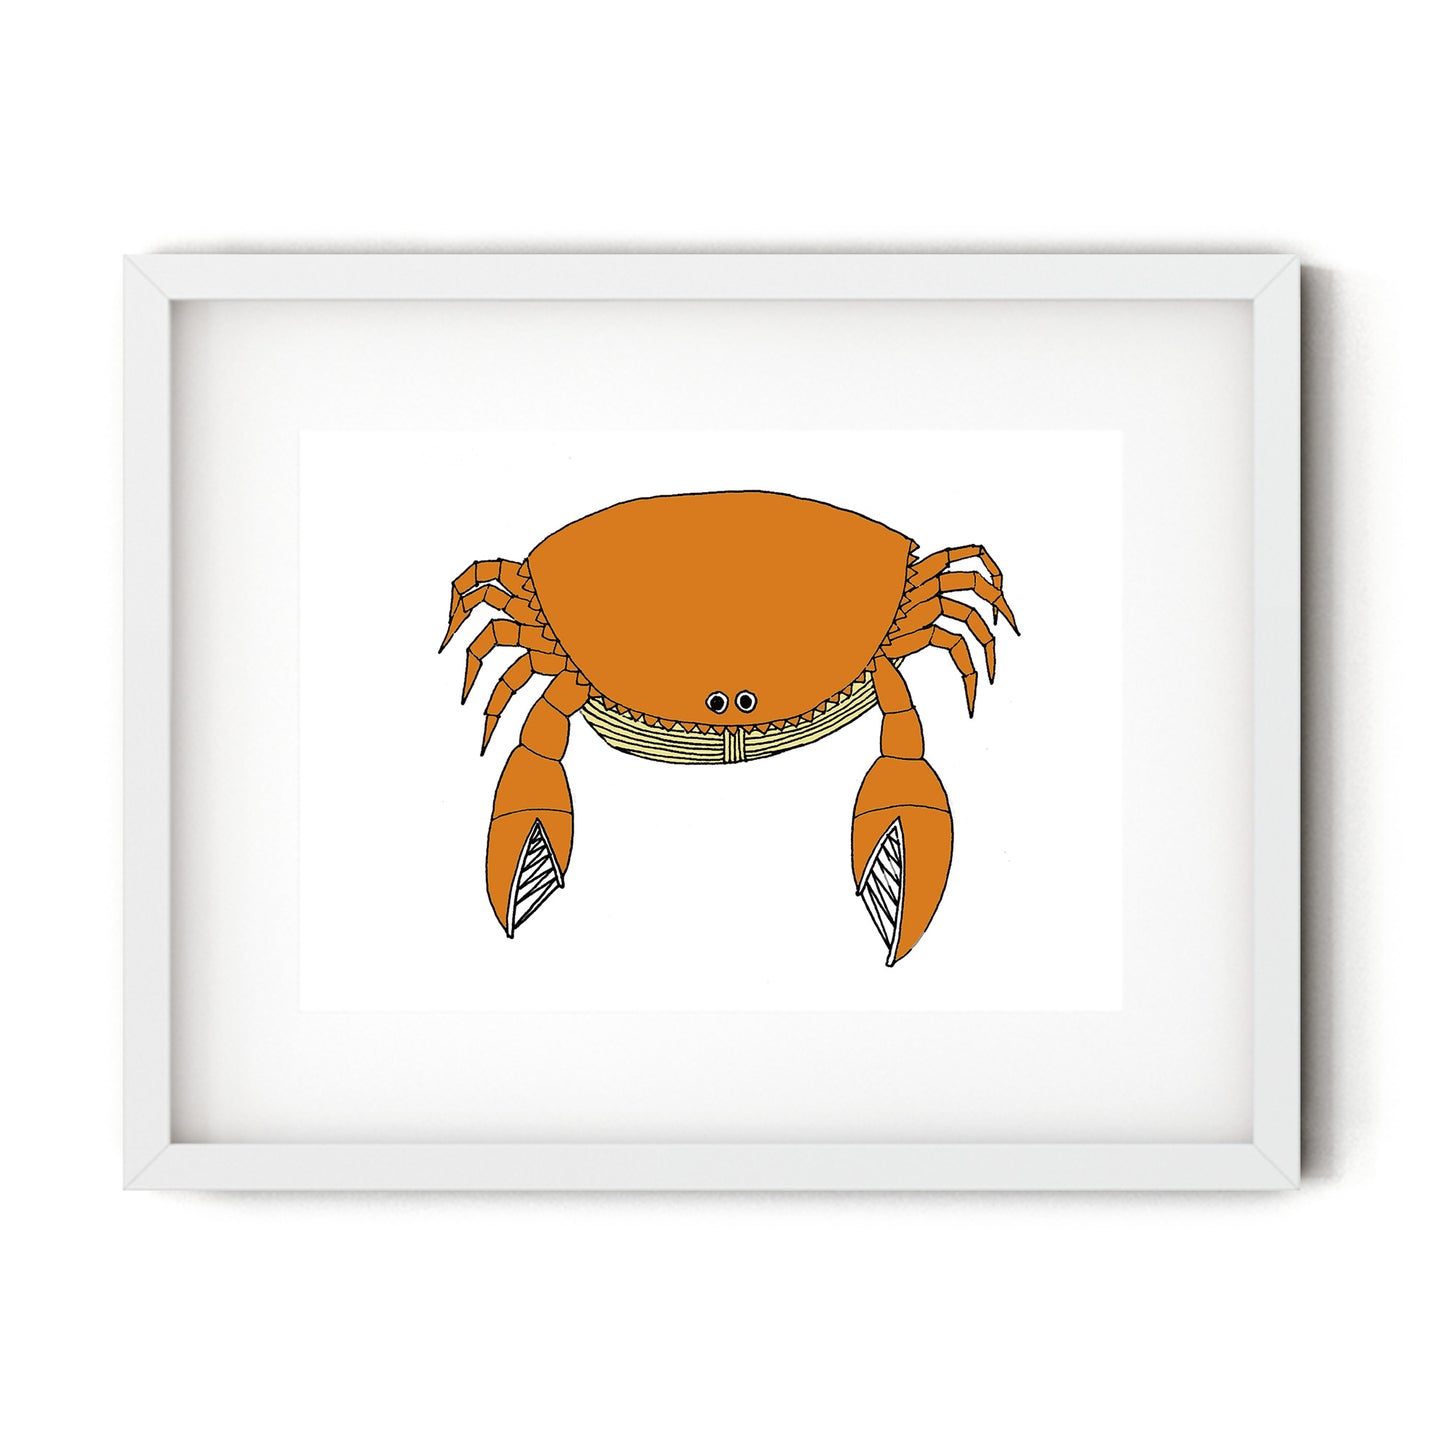 Crab - Round (Print)